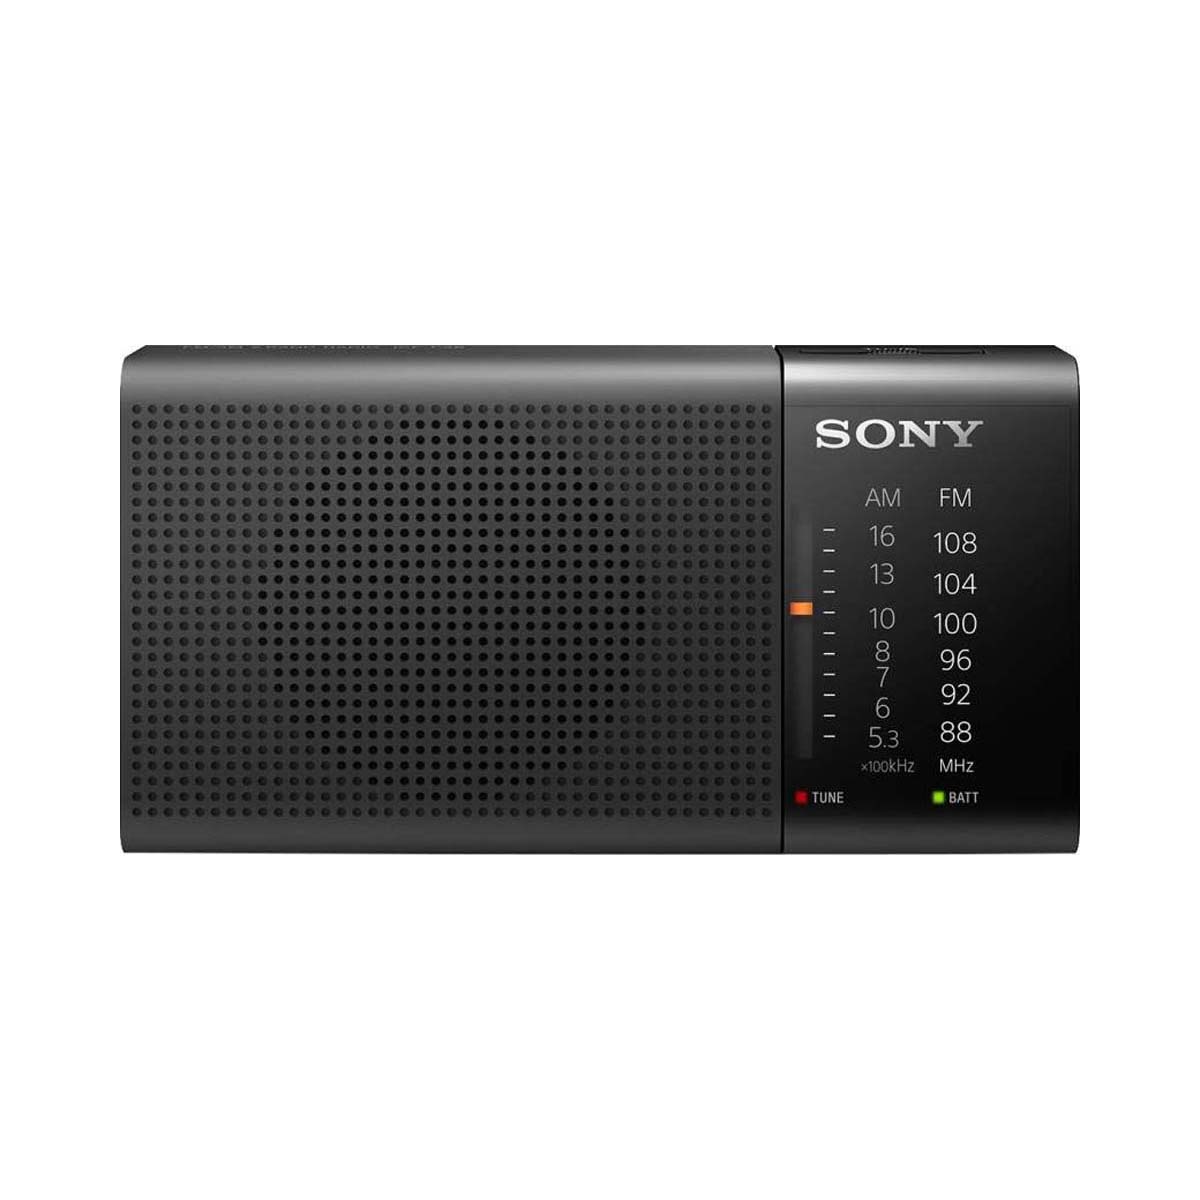 Sony - Portable AM/FM Radio with Speaker